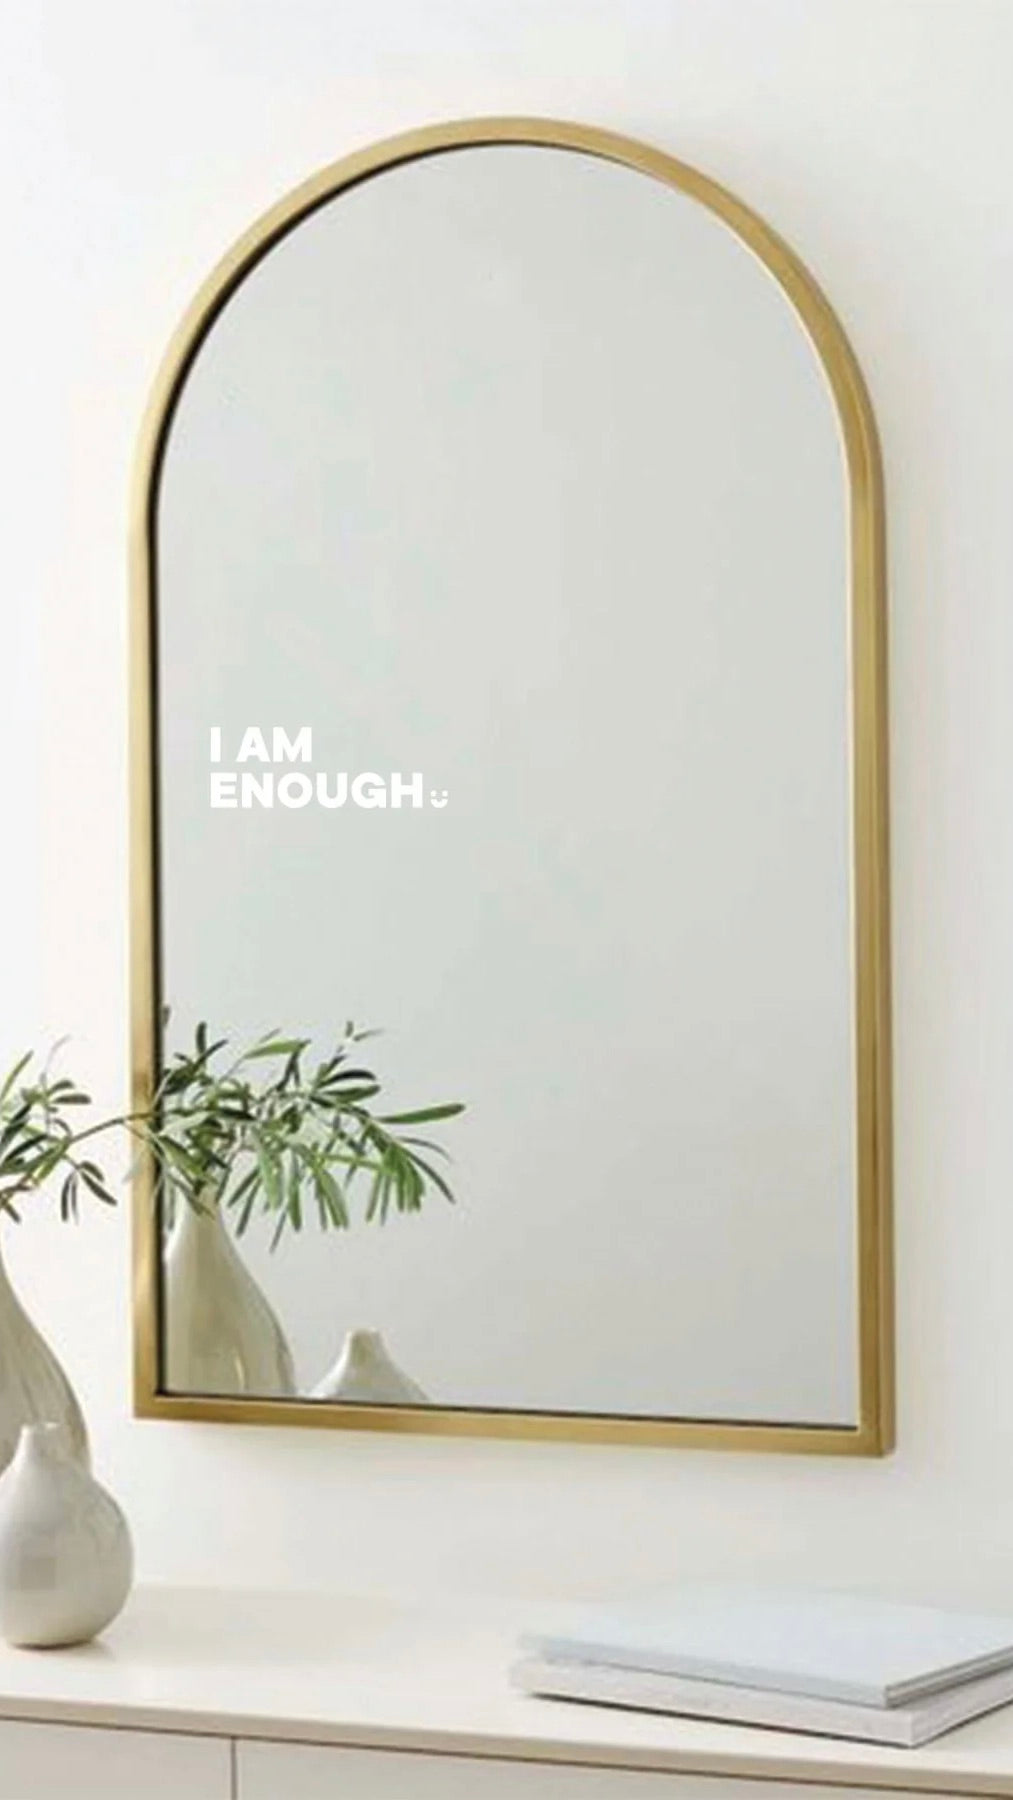 I Am Enough - Affirmation Sticker